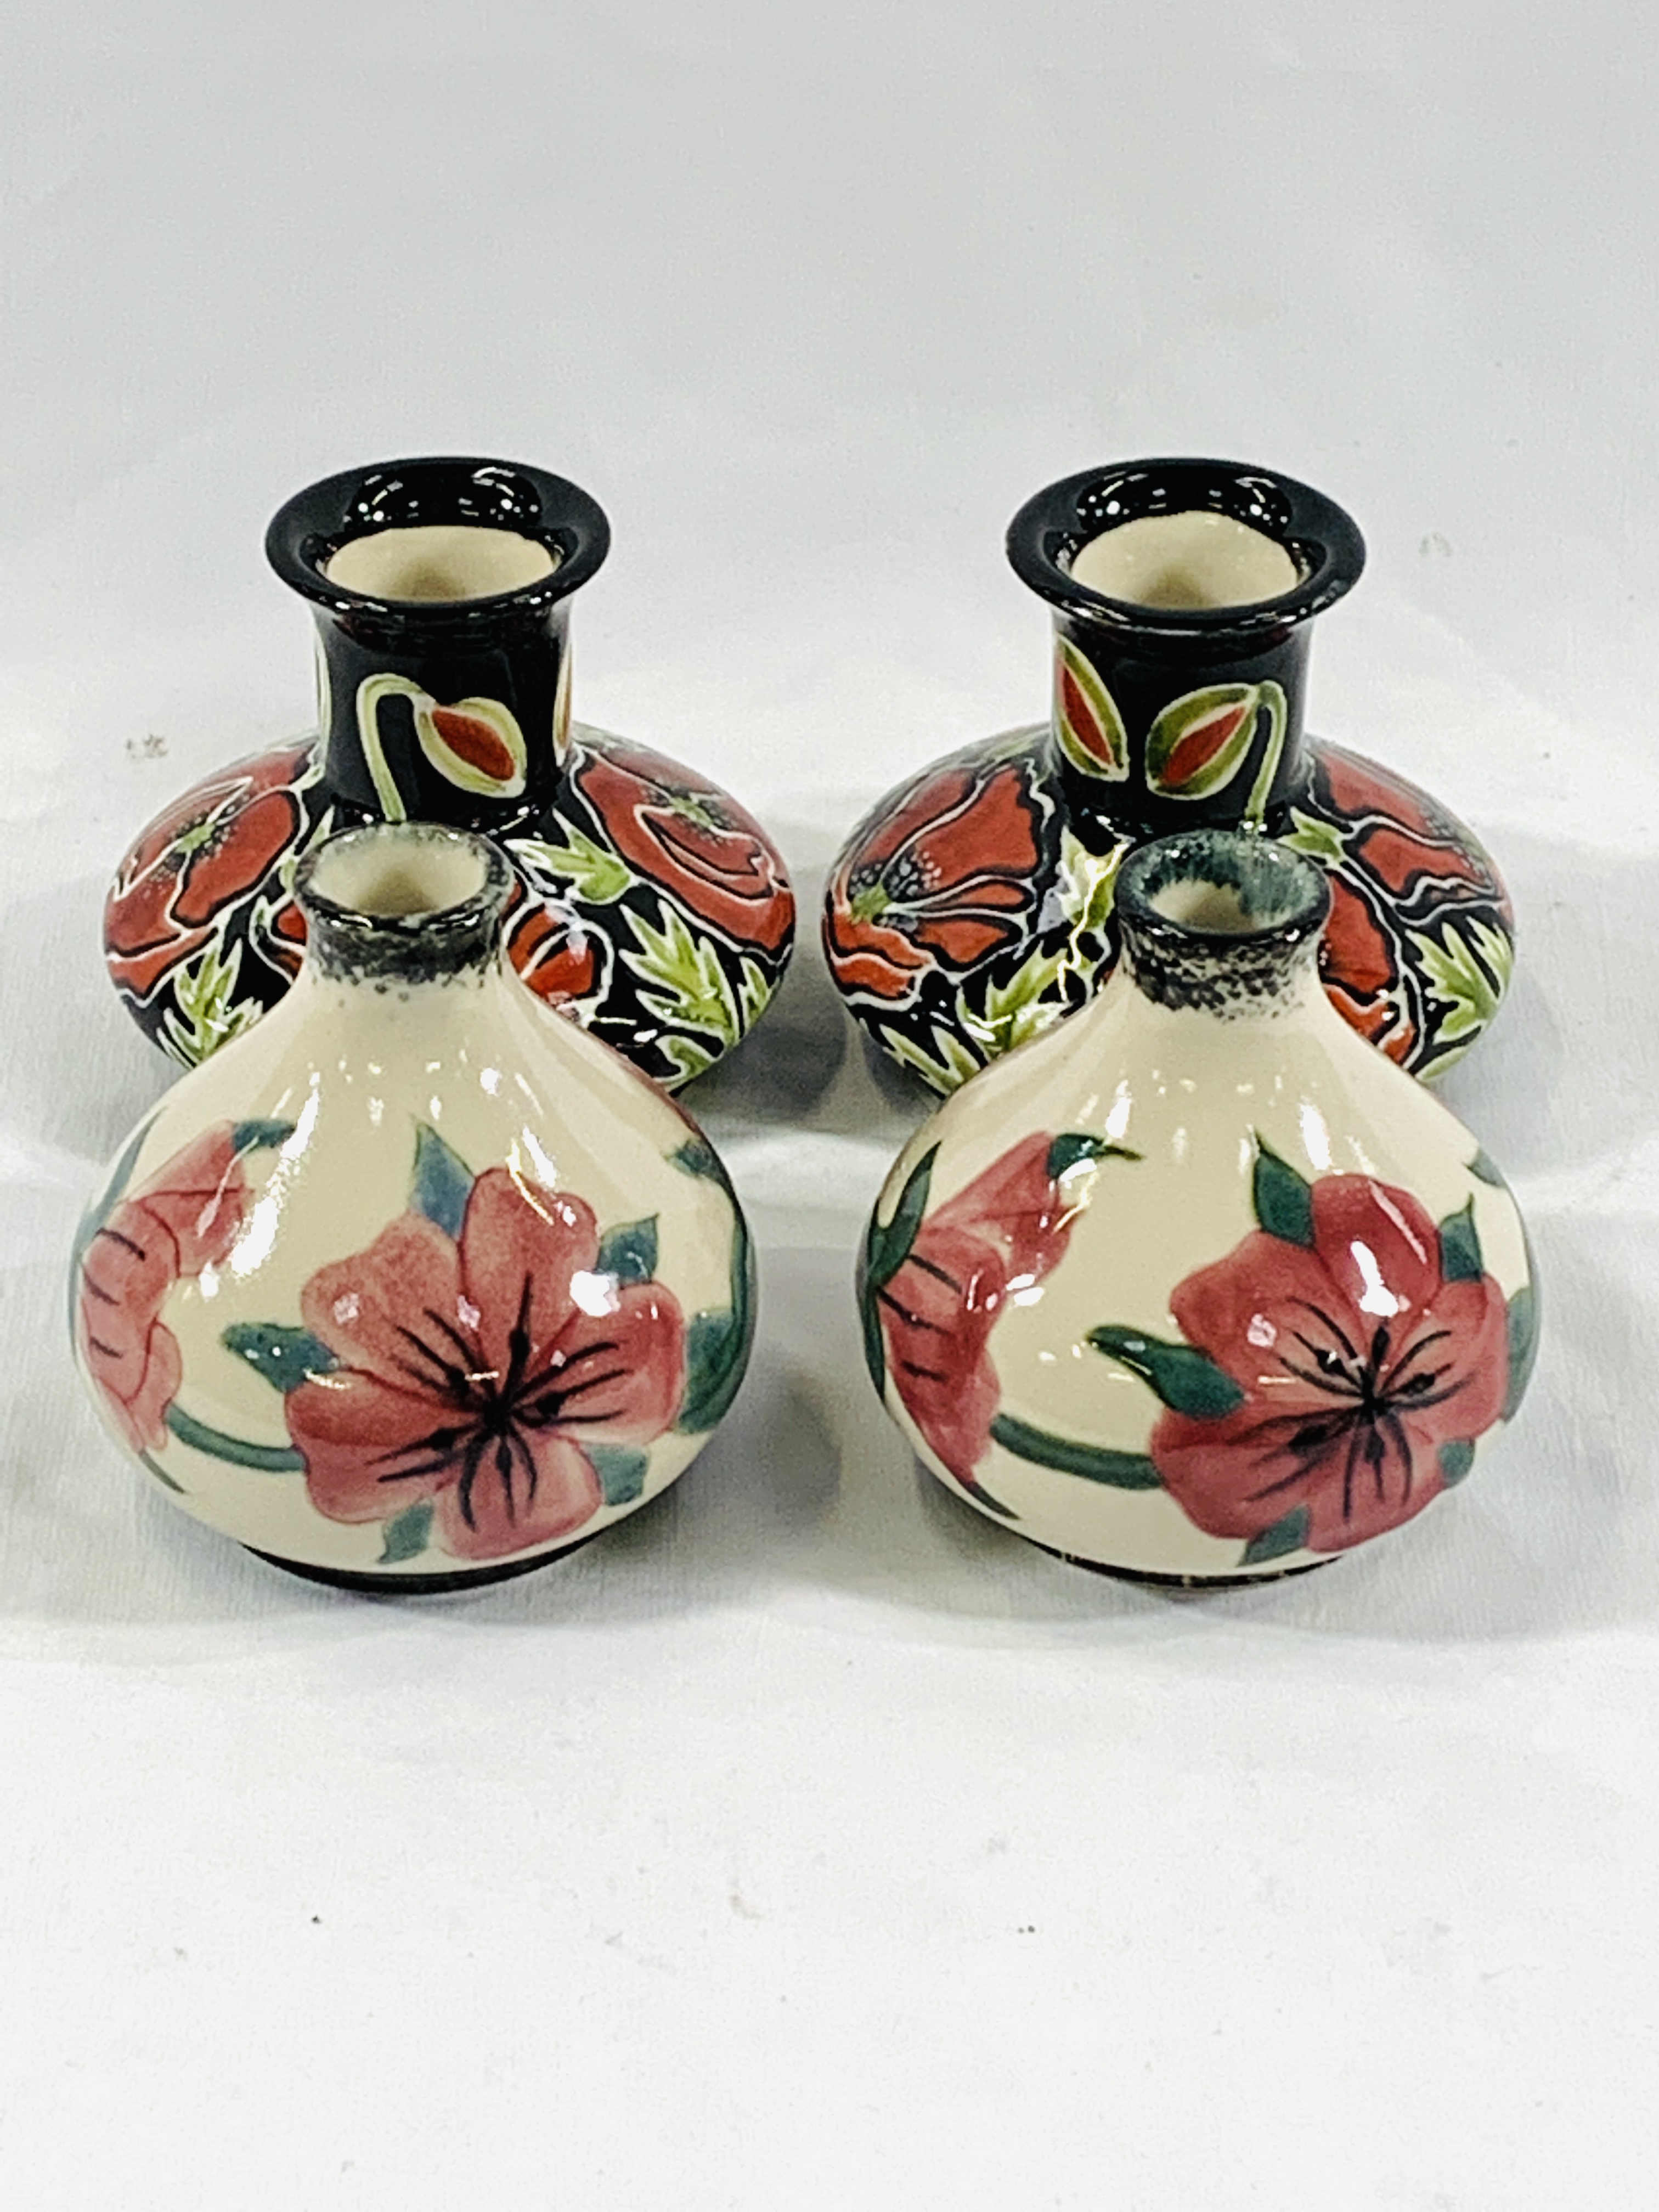 Two pairs of Cobridge vases